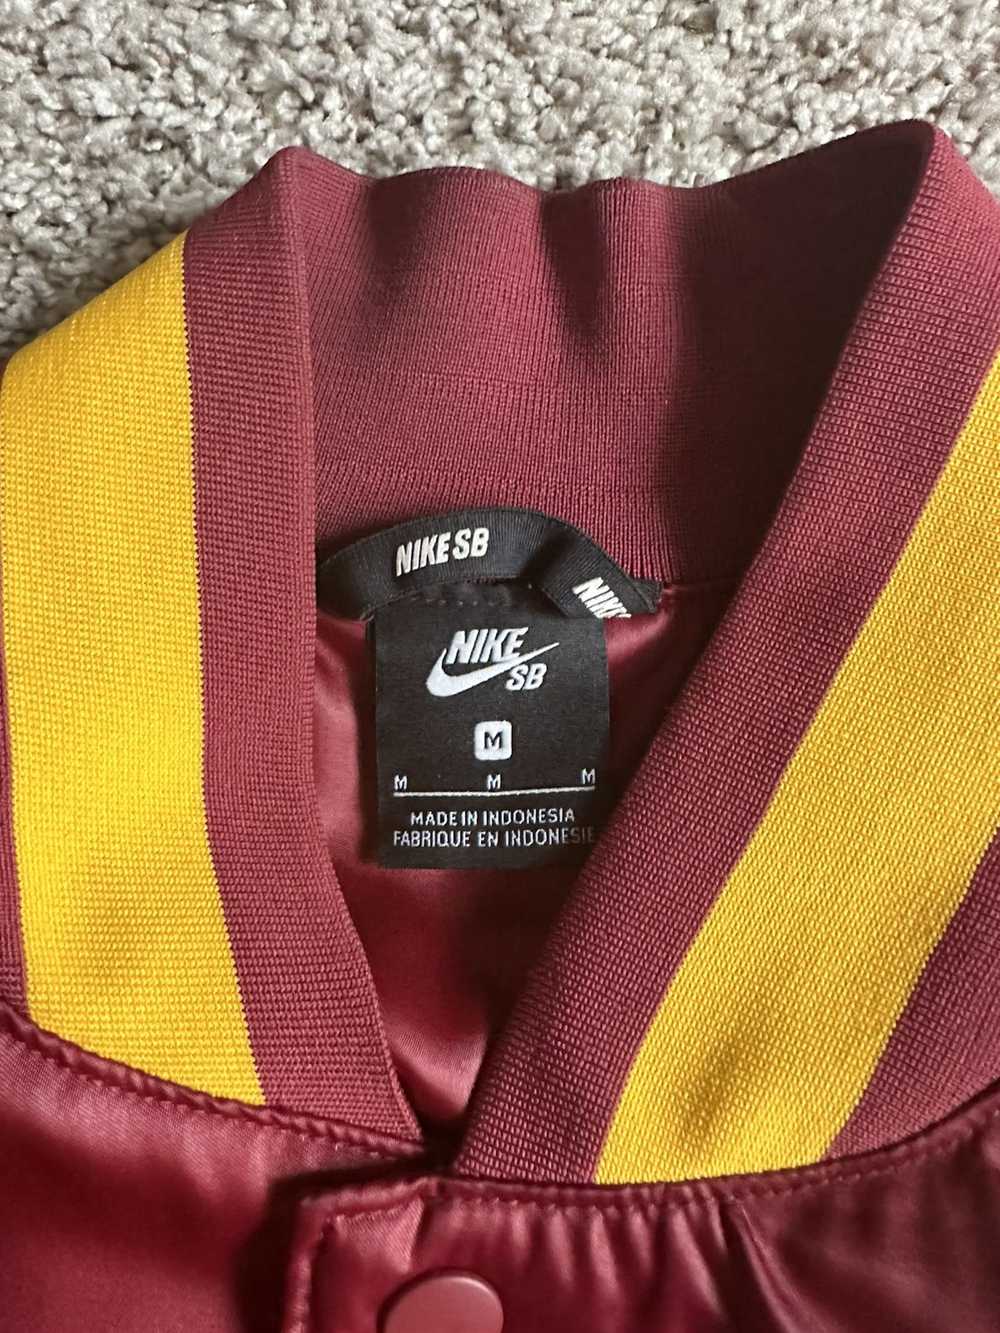 NBA × Nike Nike SB x NBA Letterman Jacket - image 3